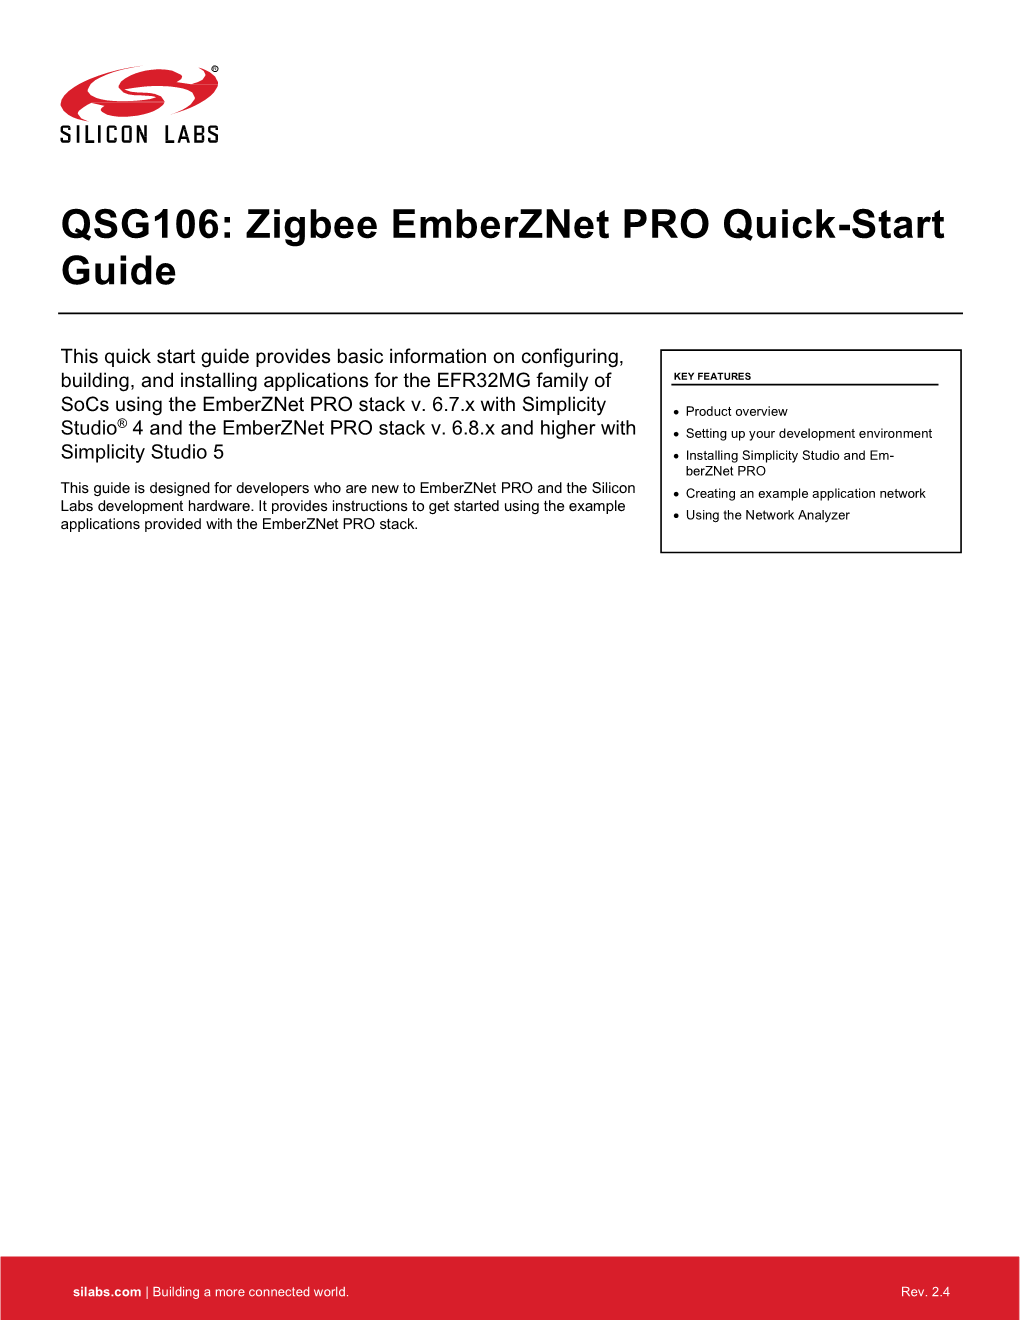 QSG106: Zigbee Emberznet PRO Quick-Start Guide